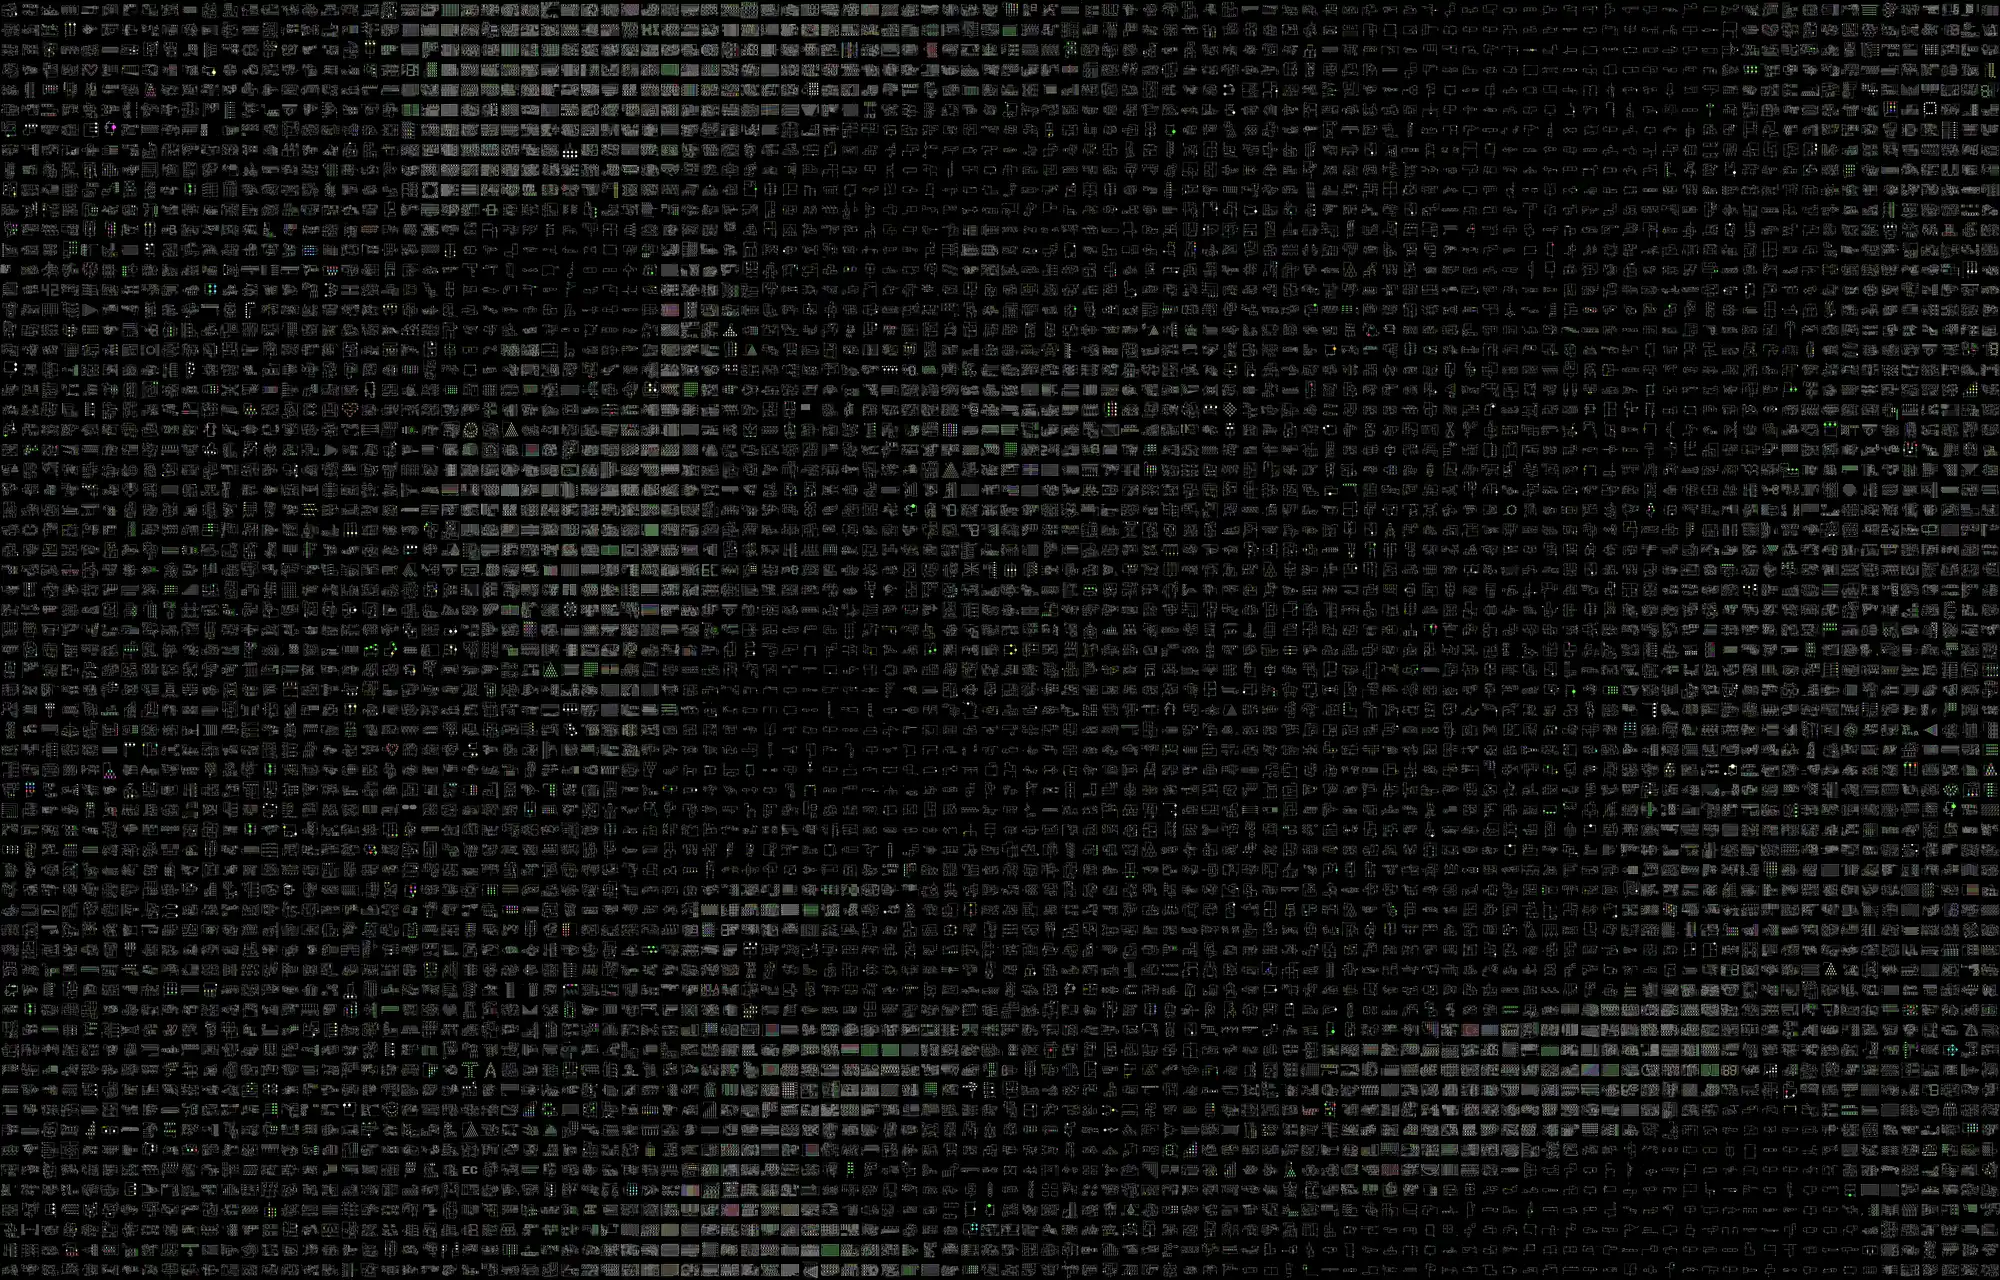 Thousands of clickable electronic circuit schematics organized into a portrait of Nikola Tesla.